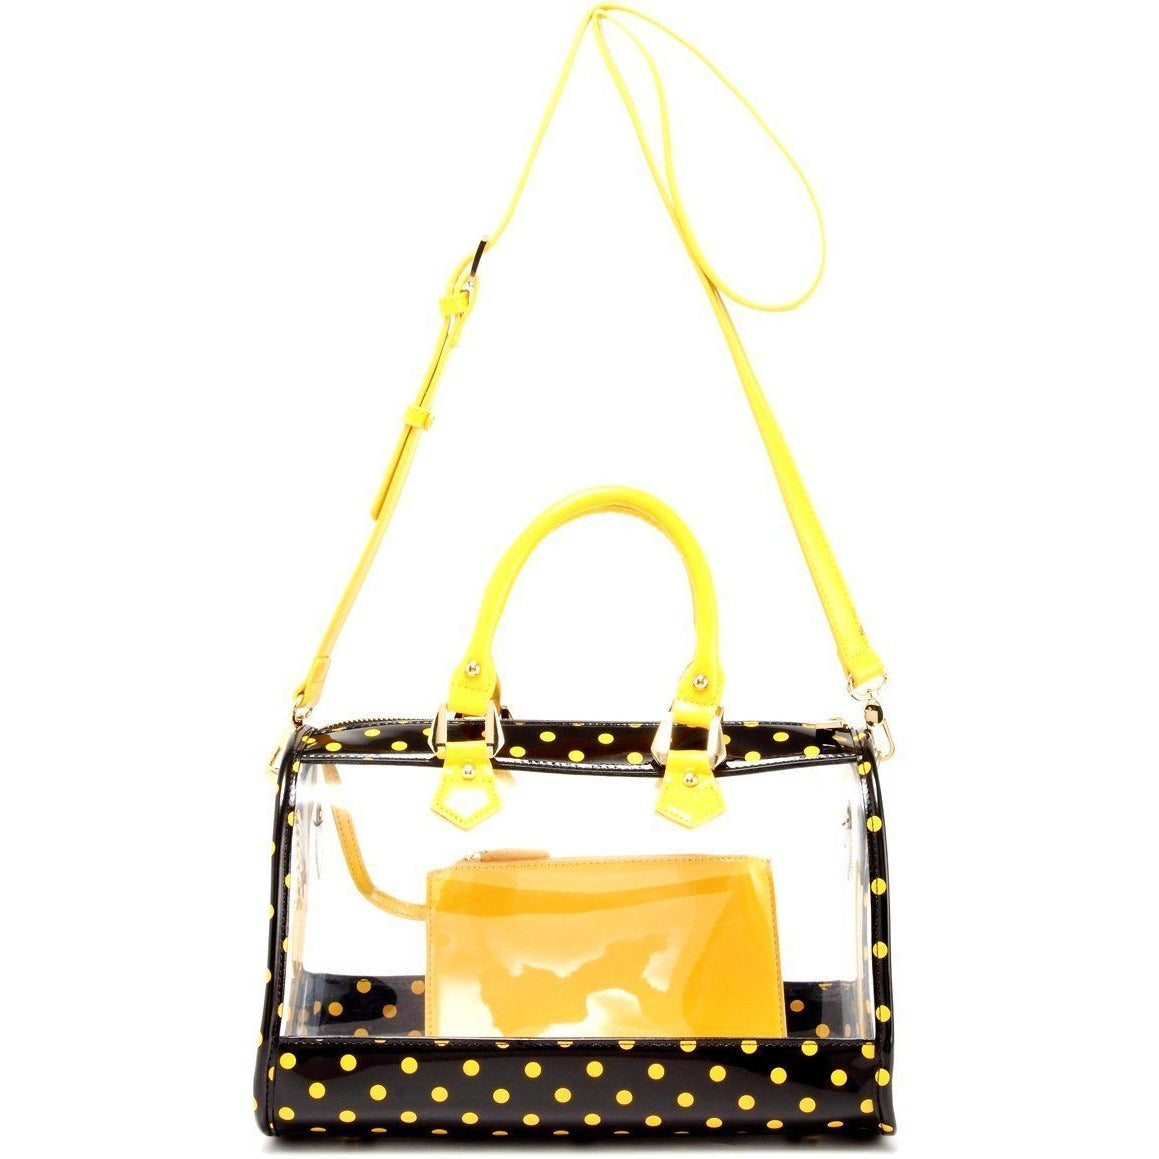 Yellow ross purse | Kate spade top handle bag, Bags, Kate spade top handle